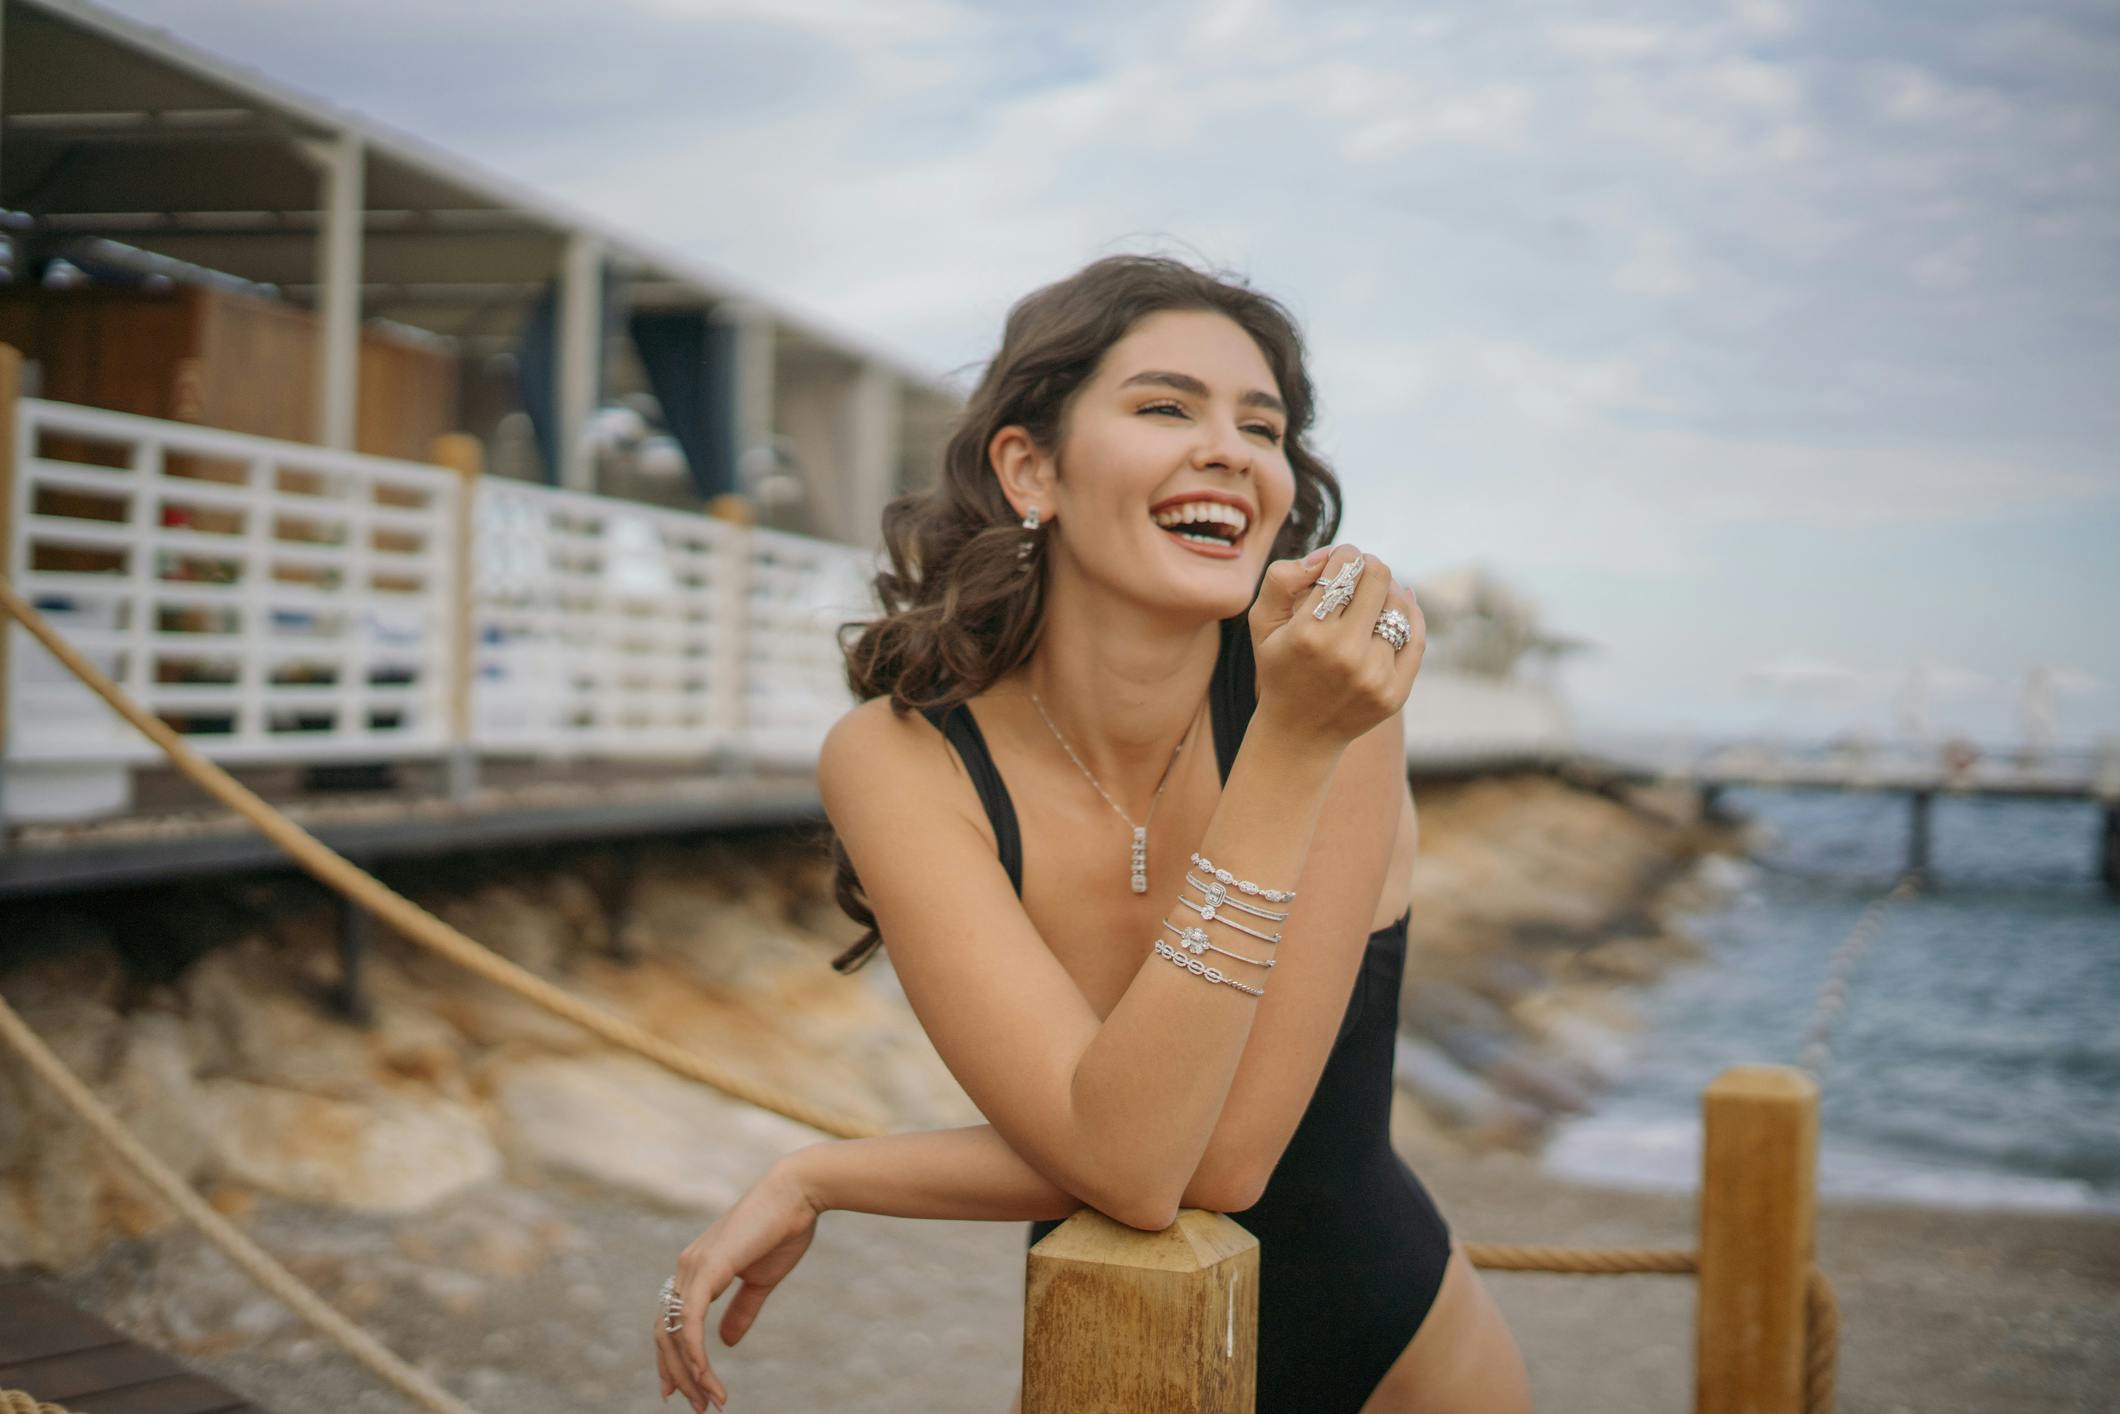 Woman at boat dock smiling